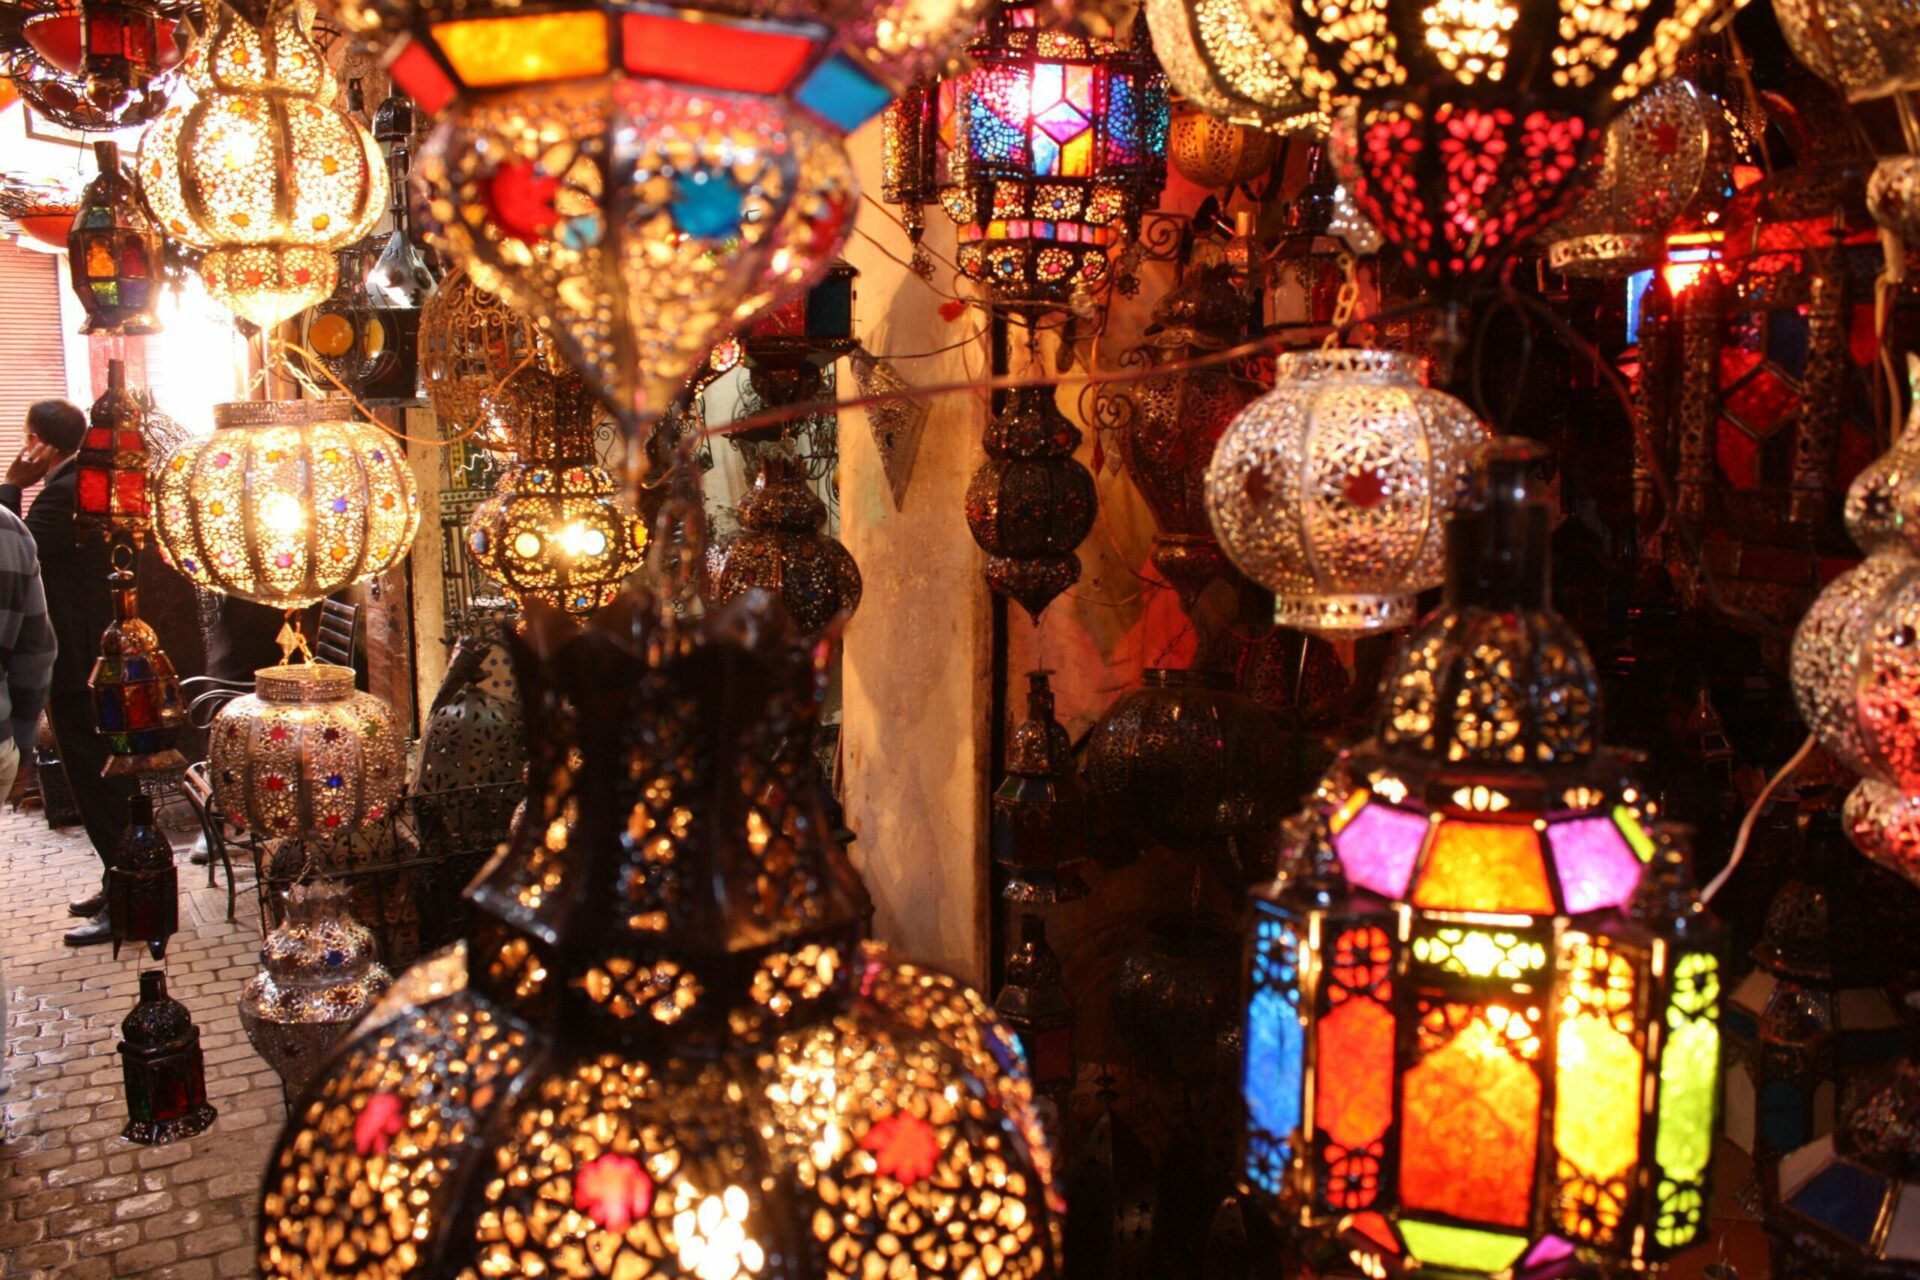 Treasures in the souk of Marrakech